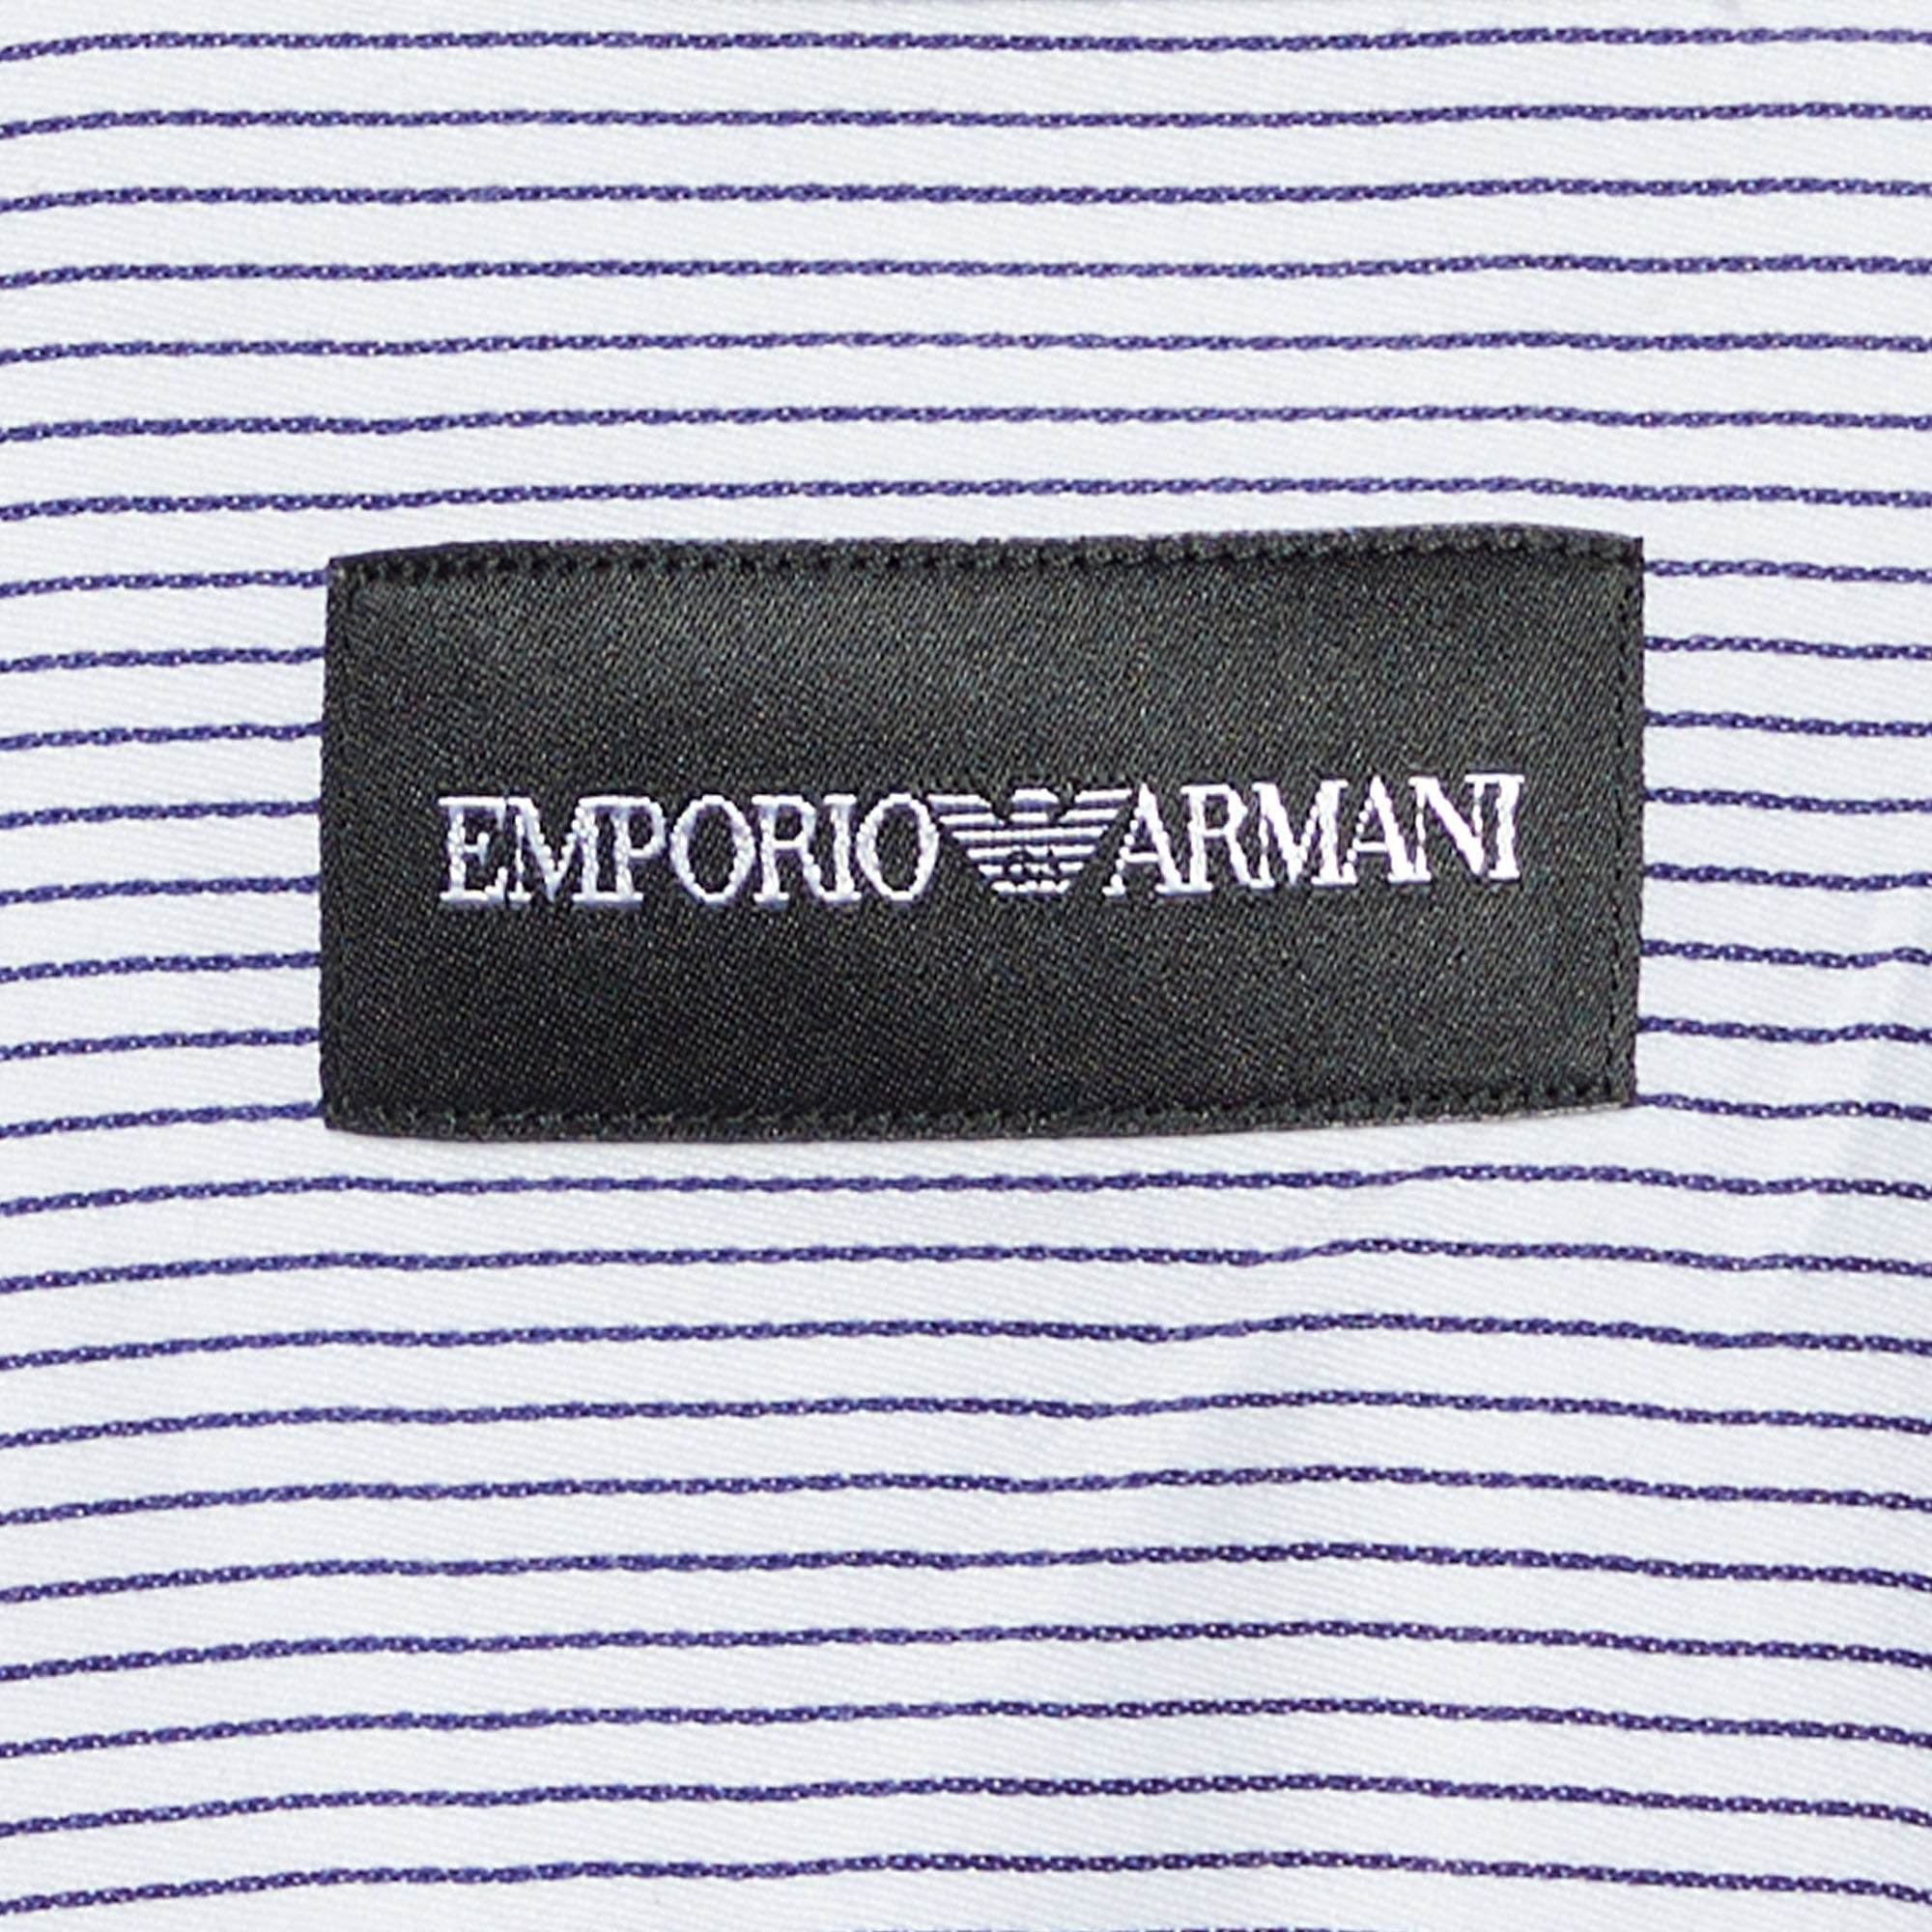 Emporio Armani White & Blue Striped Cotton Button Front Shirt M